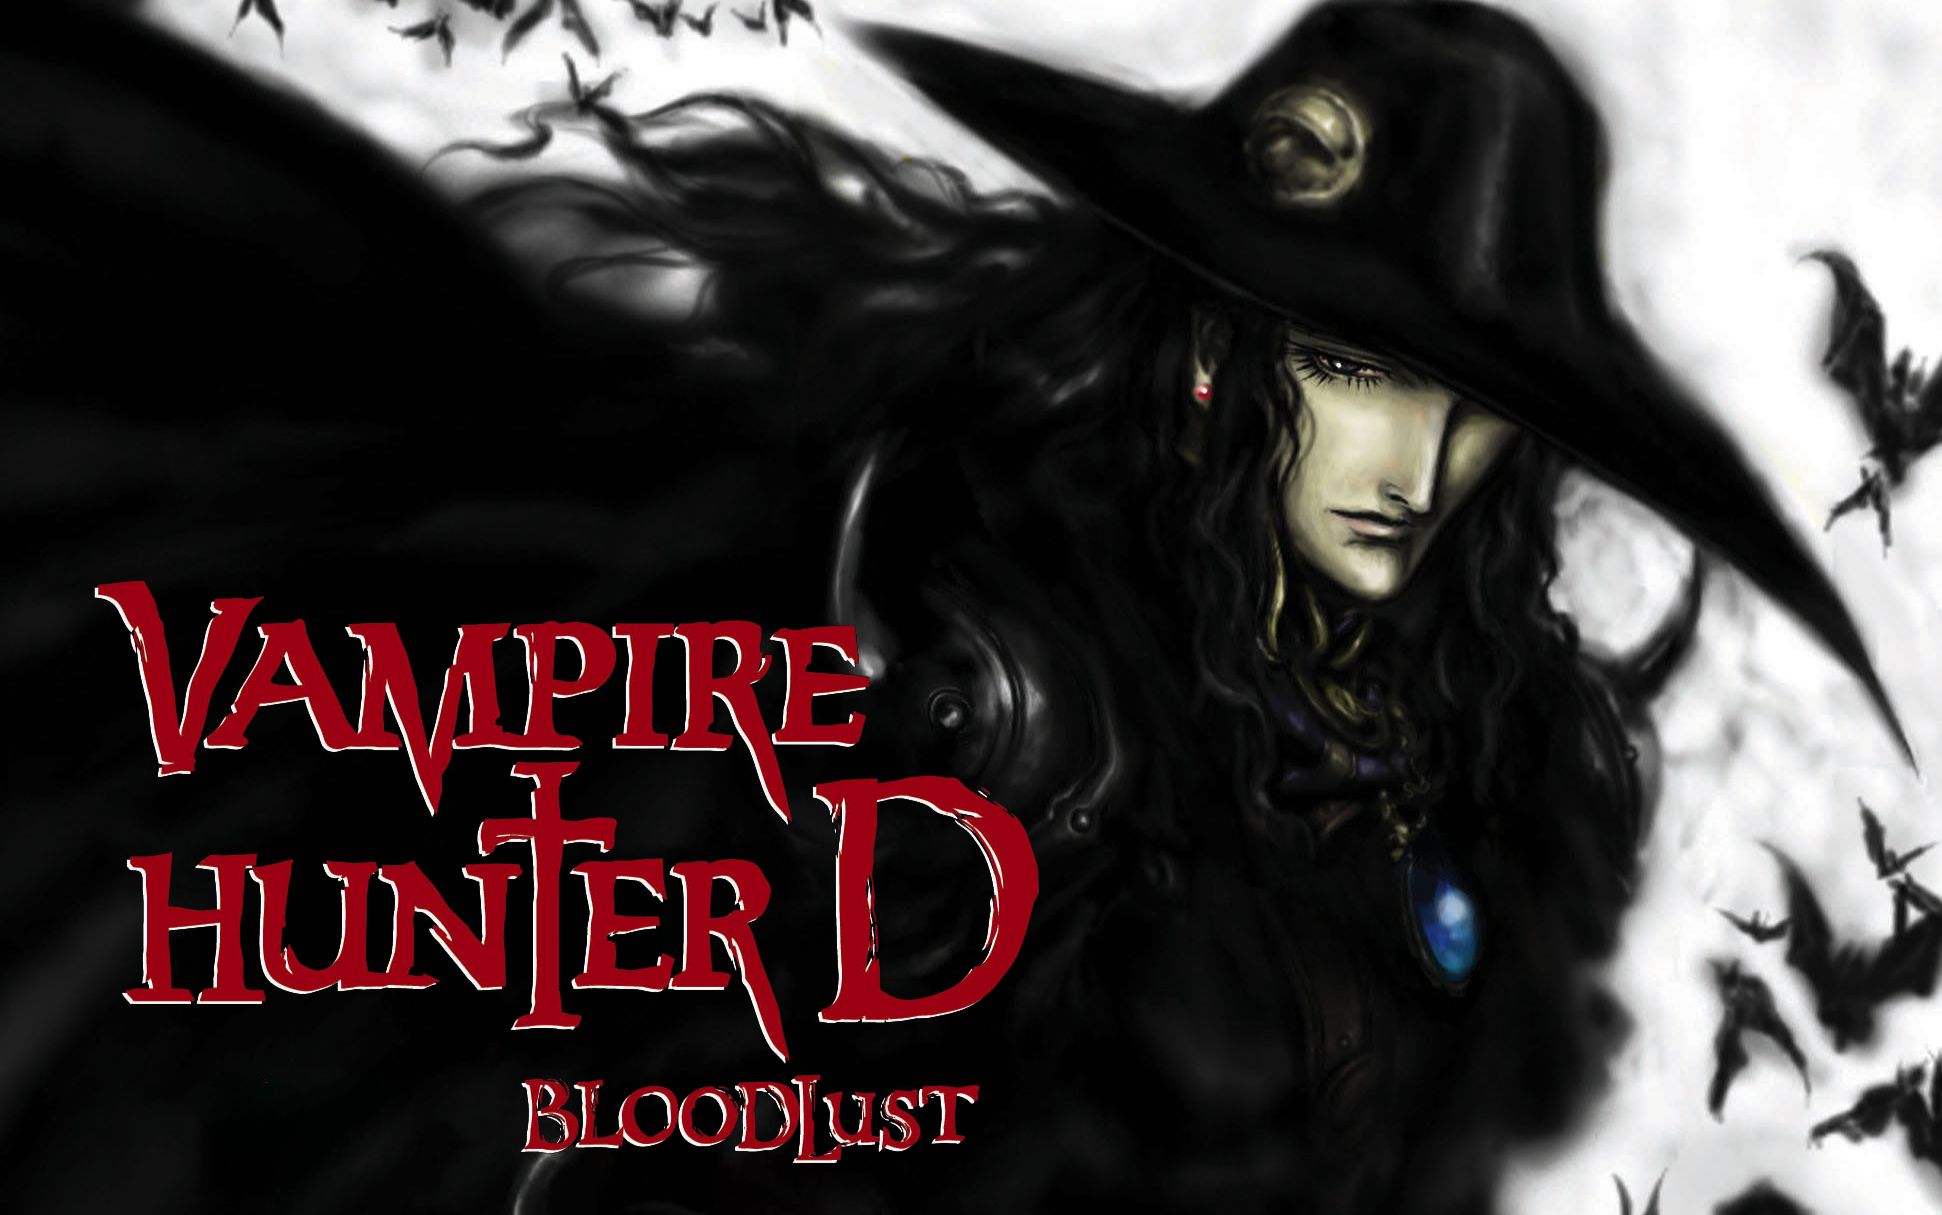 1080p rip 吸血鬼猎人d Vampire Hunter D Bloodlust 00 灵风 哔哩哔哩 つロ干杯 Bilibili